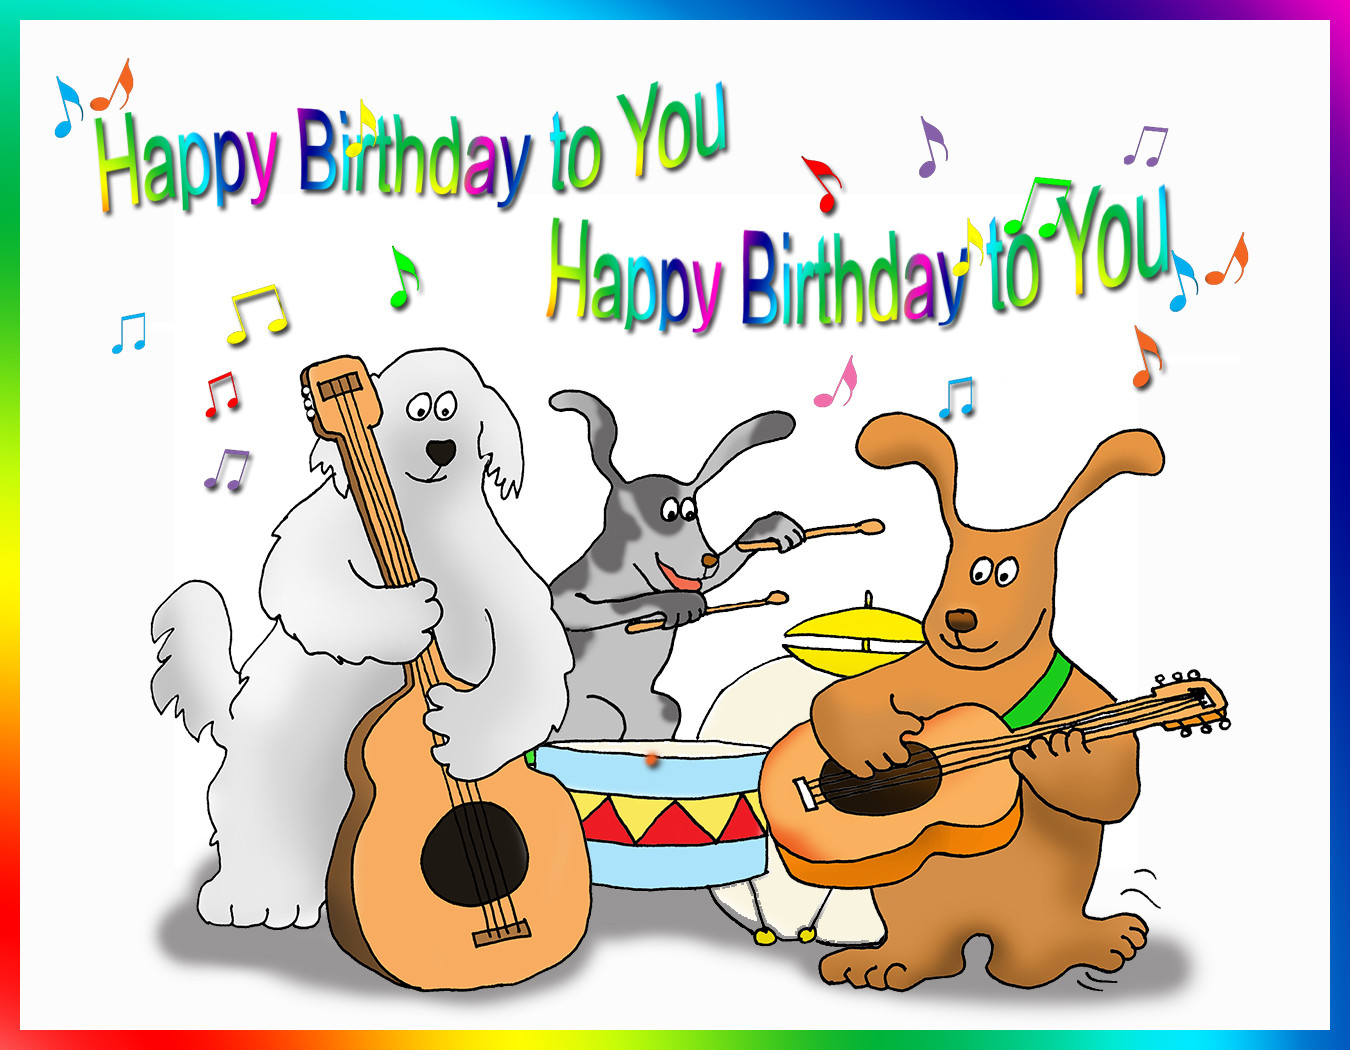 Free Funny Printable Birthday Cards
 Happy Birthday Card for You – Free Printable Greeting Cards